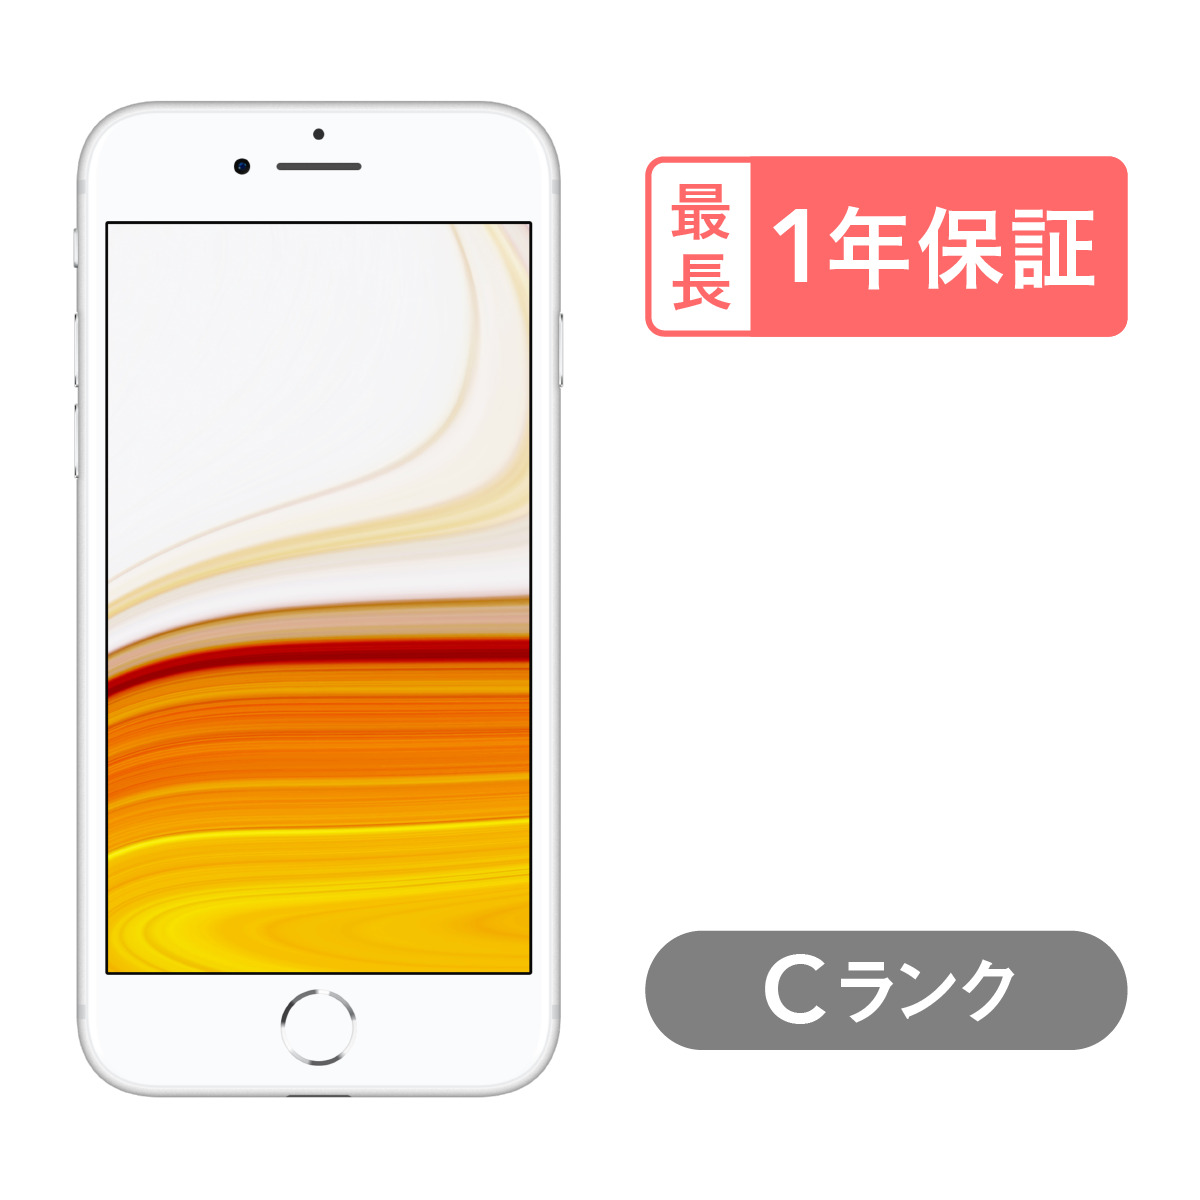 iPhone 8 64GB 中古 SIMフリー ゴールド レッド シルバー スペースグレイ docomo au softbank